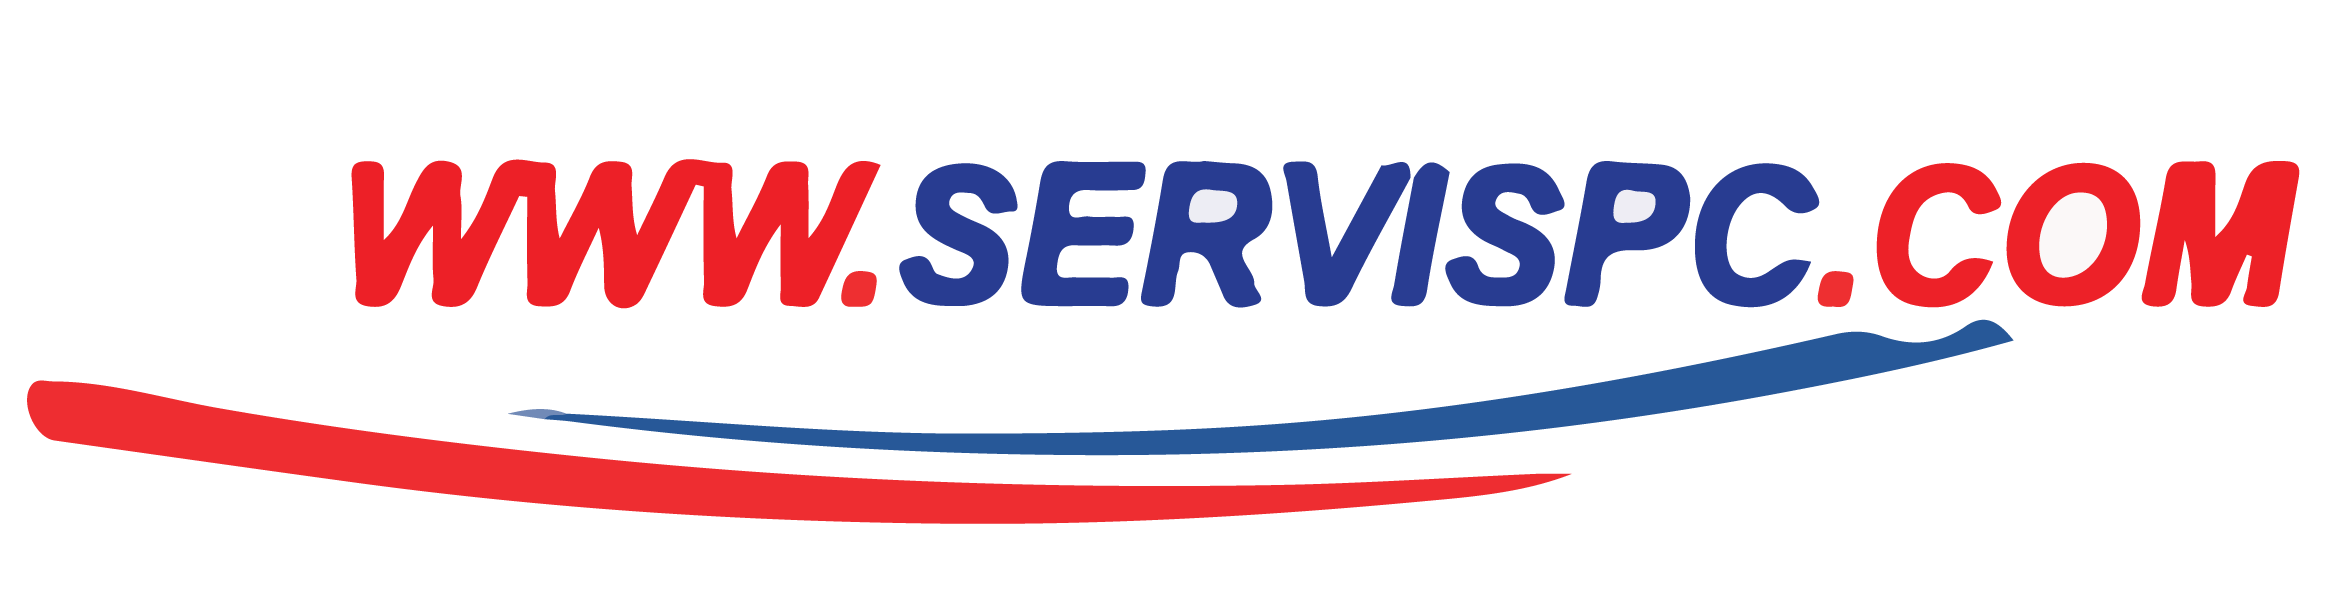 139-partners-servispc